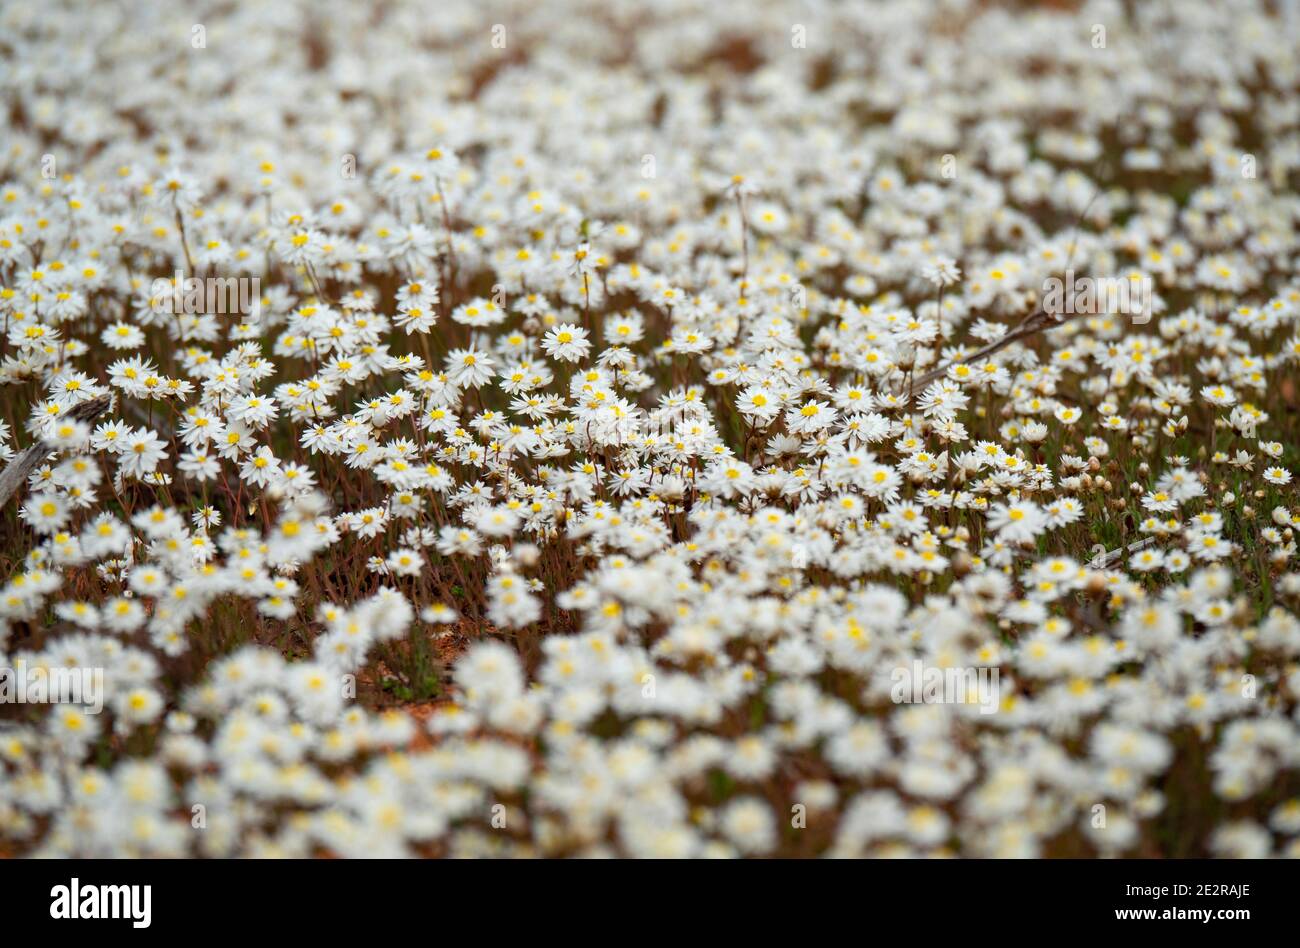 White everlasting flowers - Paper Daisys - wildflowers near Morawa Western Australia. Stock Photo